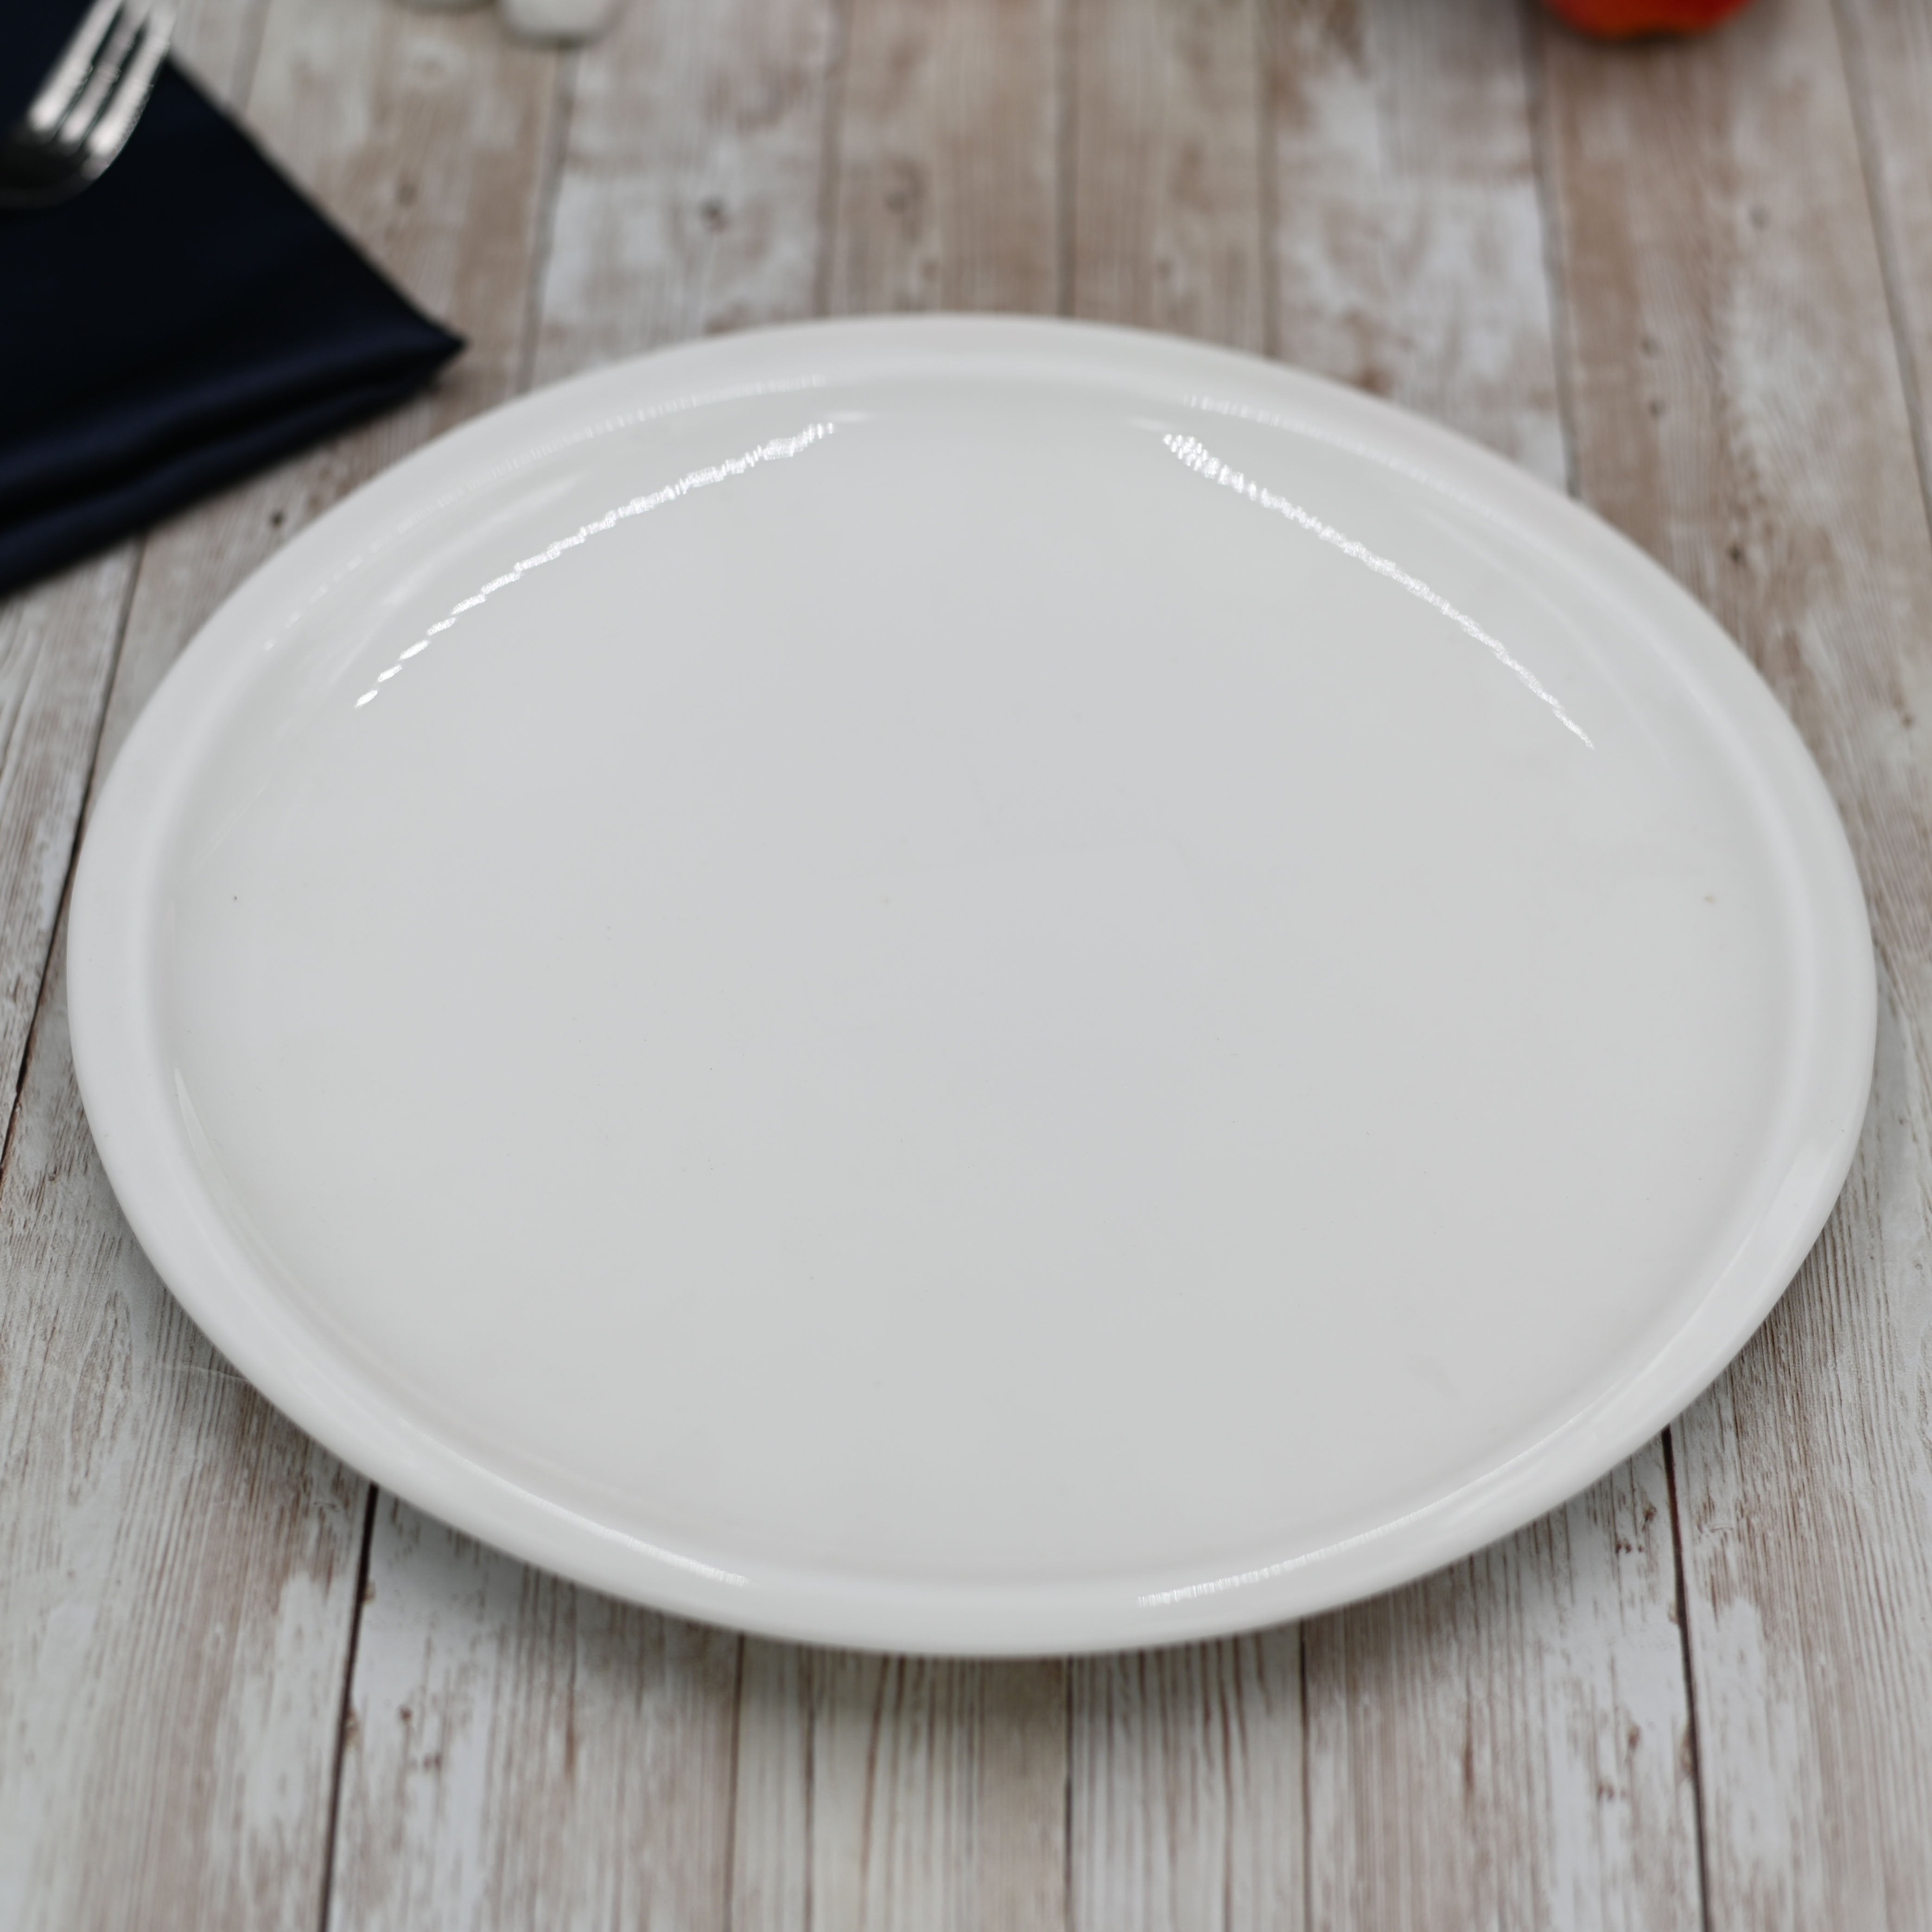 Set oSet of 3 Fine Porcelain 10.5" Round Dinner Platesf 3 Fine Porcelain 10.5" Round Dinner Plates